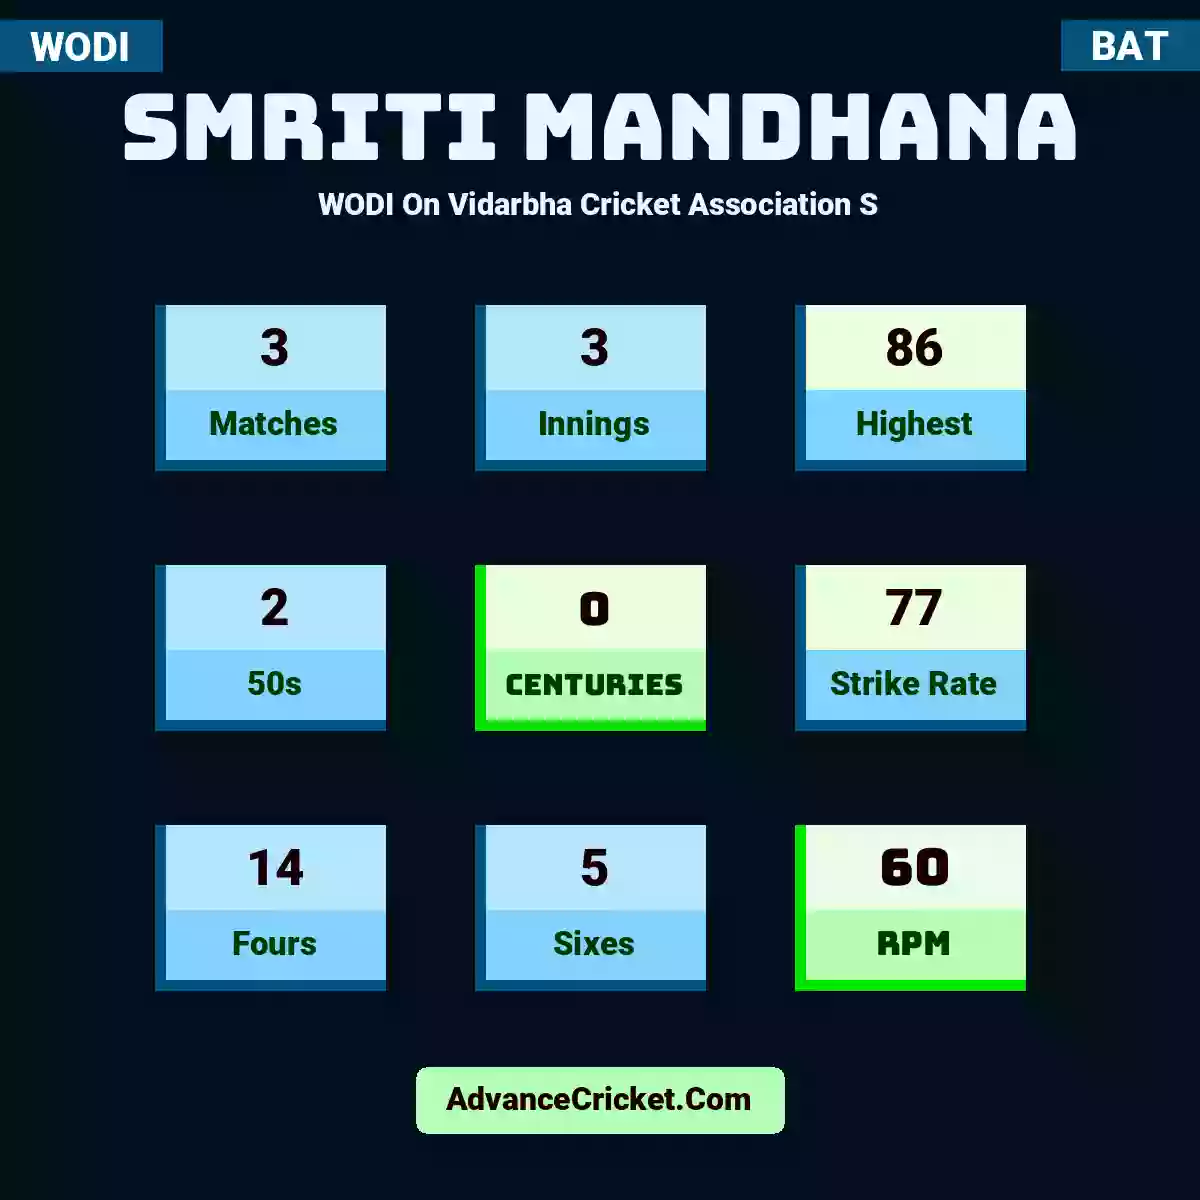 Smriti Mandhana WODI  On Vidarbha Cricket Association S, Smriti Mandhana played 3 matches, scored 86 runs as highest, 2 half-centuries, and 0 centuries, with a strike rate of 77. S.Mandhana hit 14 fours and 5 sixes, with an RPM of 60.